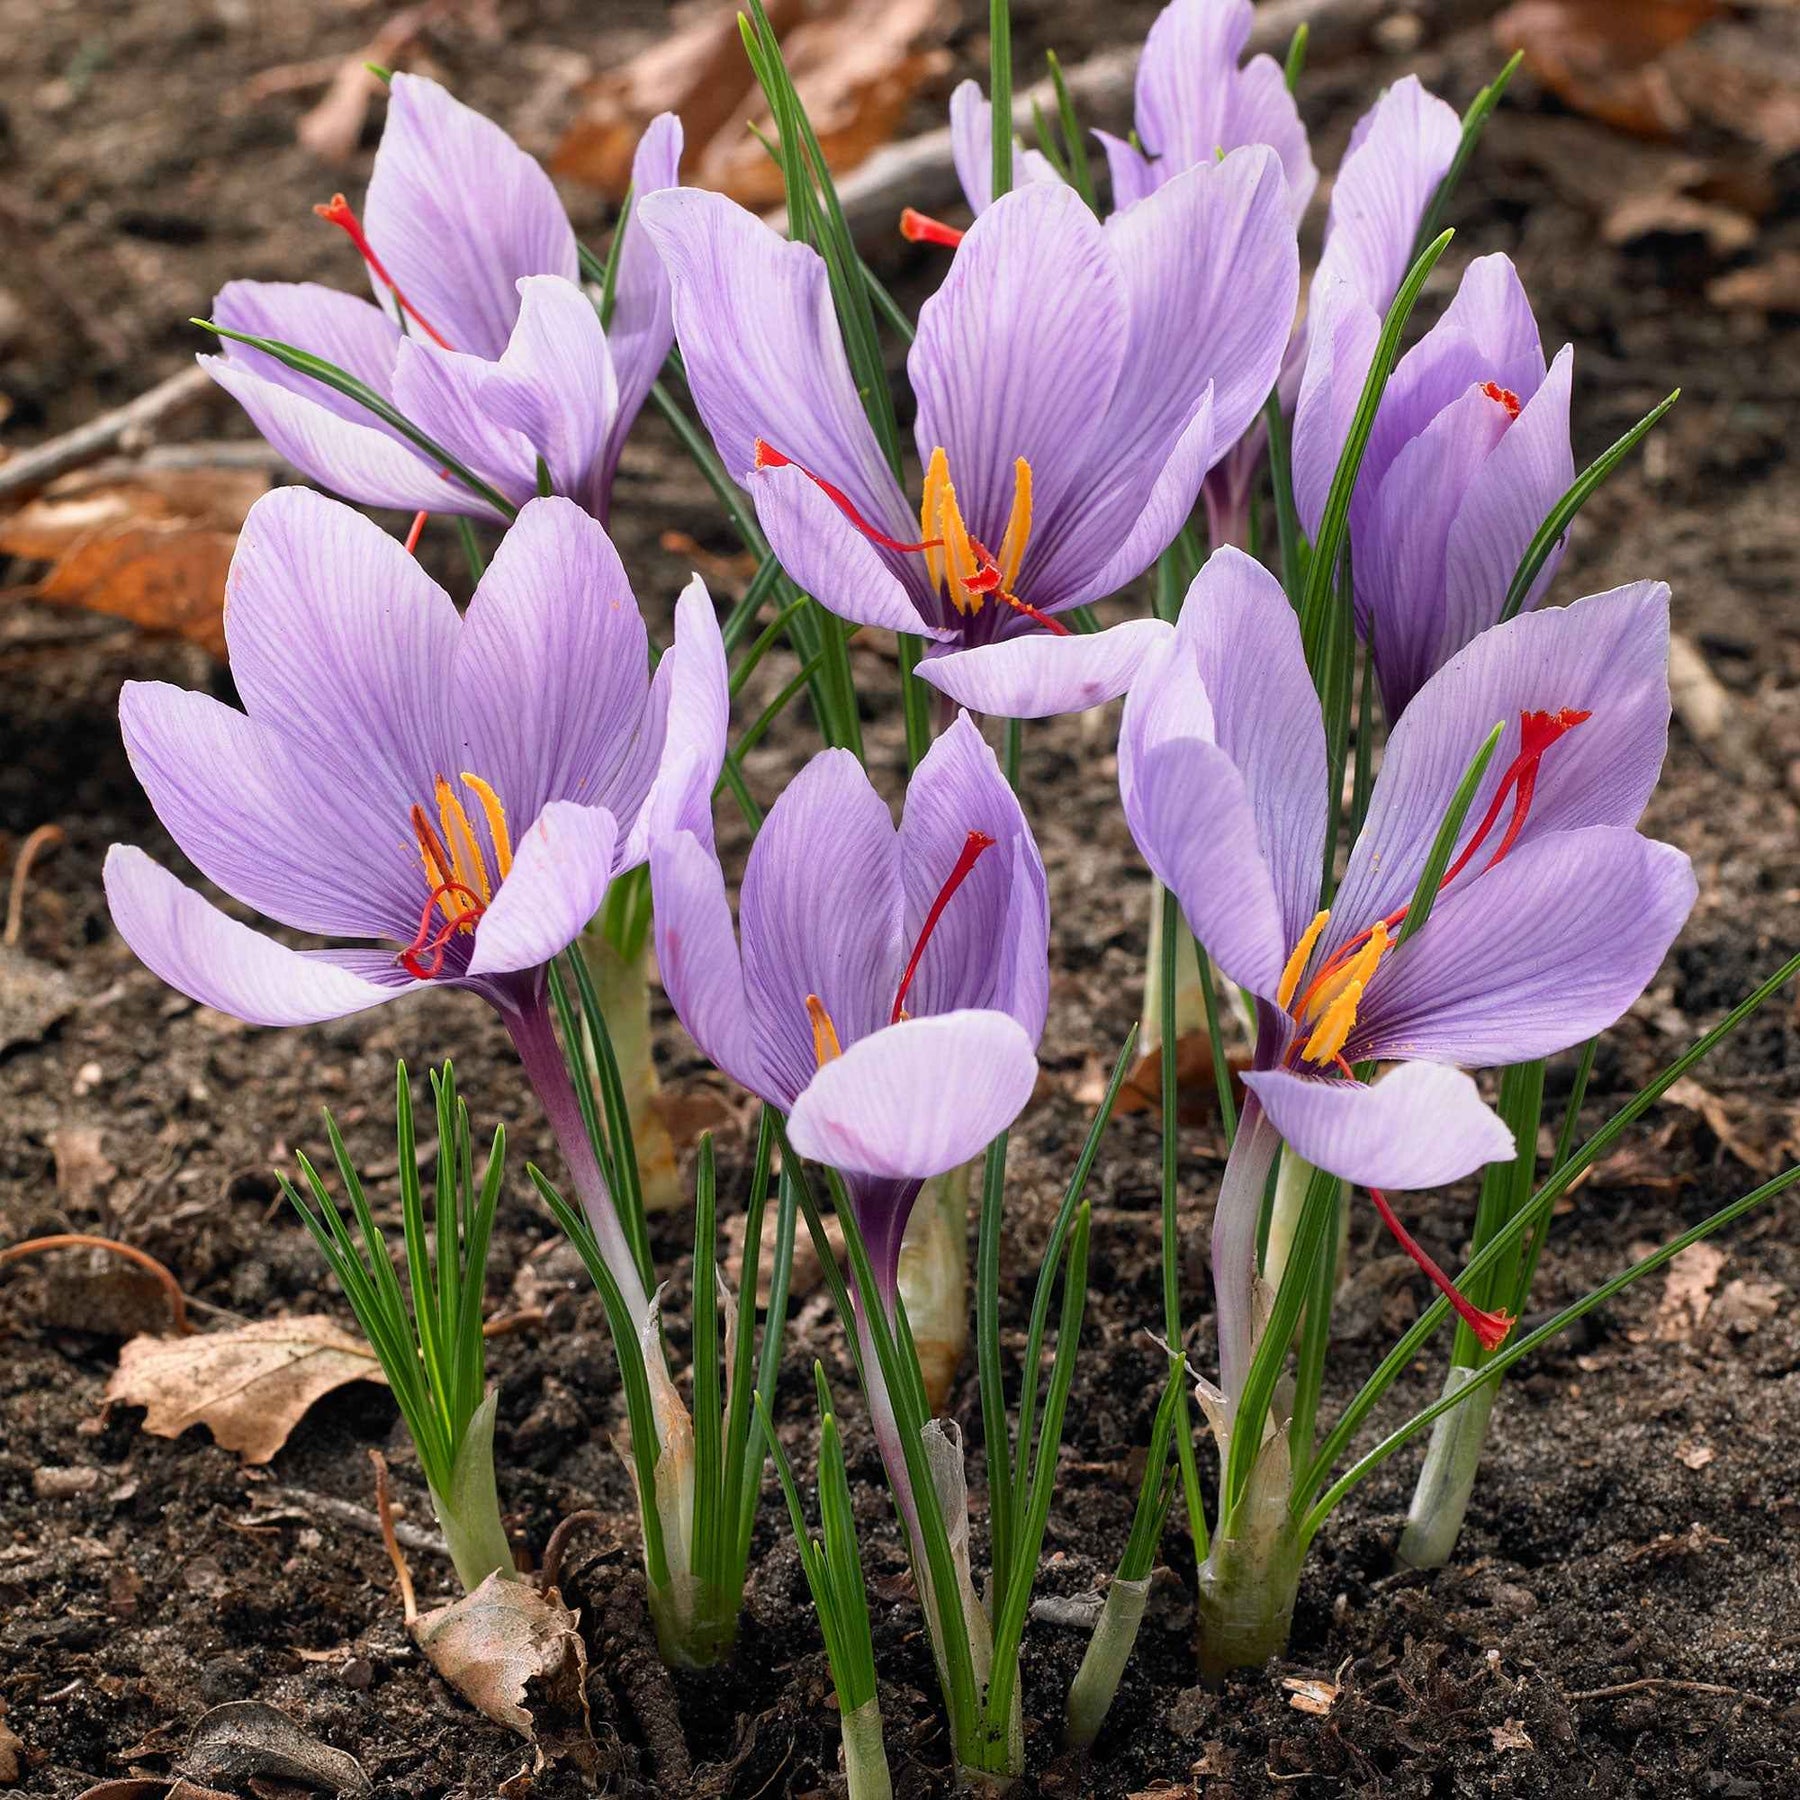 Crocus safran - Crocus sativus - Crocus